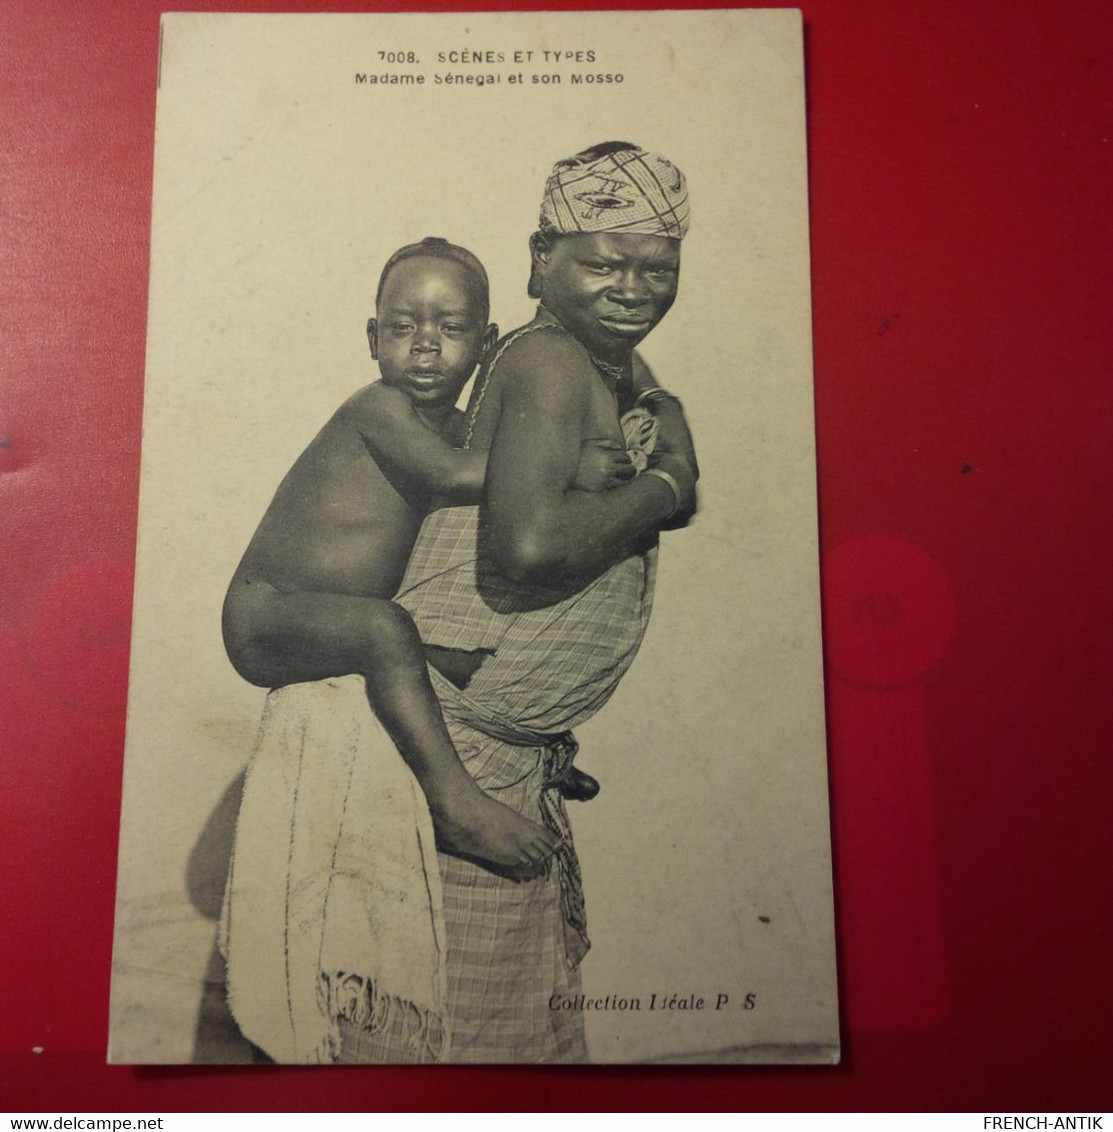 MADAME SENEGAL ET SON MOSSO - Senegal